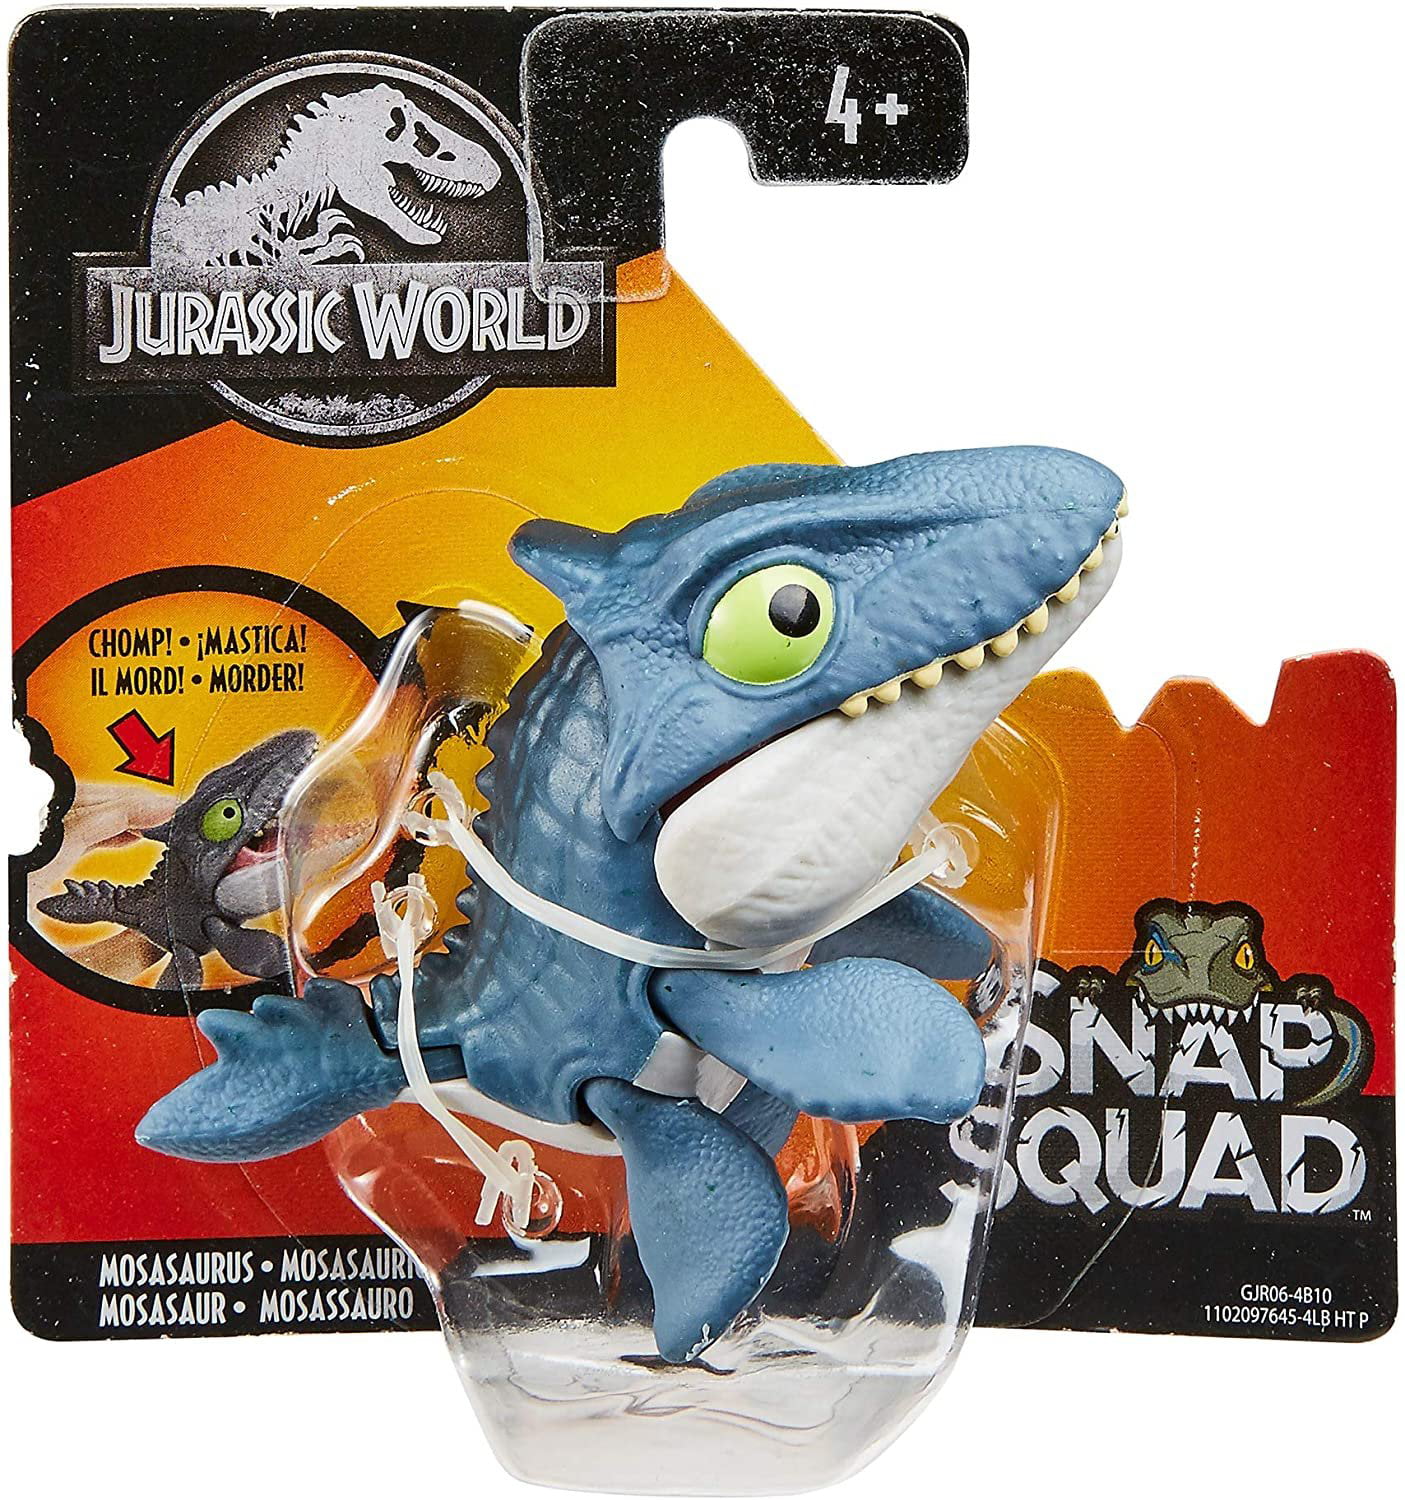 Jurassic World Camp Cretaceous Snap Squad Mosasaurus Dinosaur Netflix for sale online 